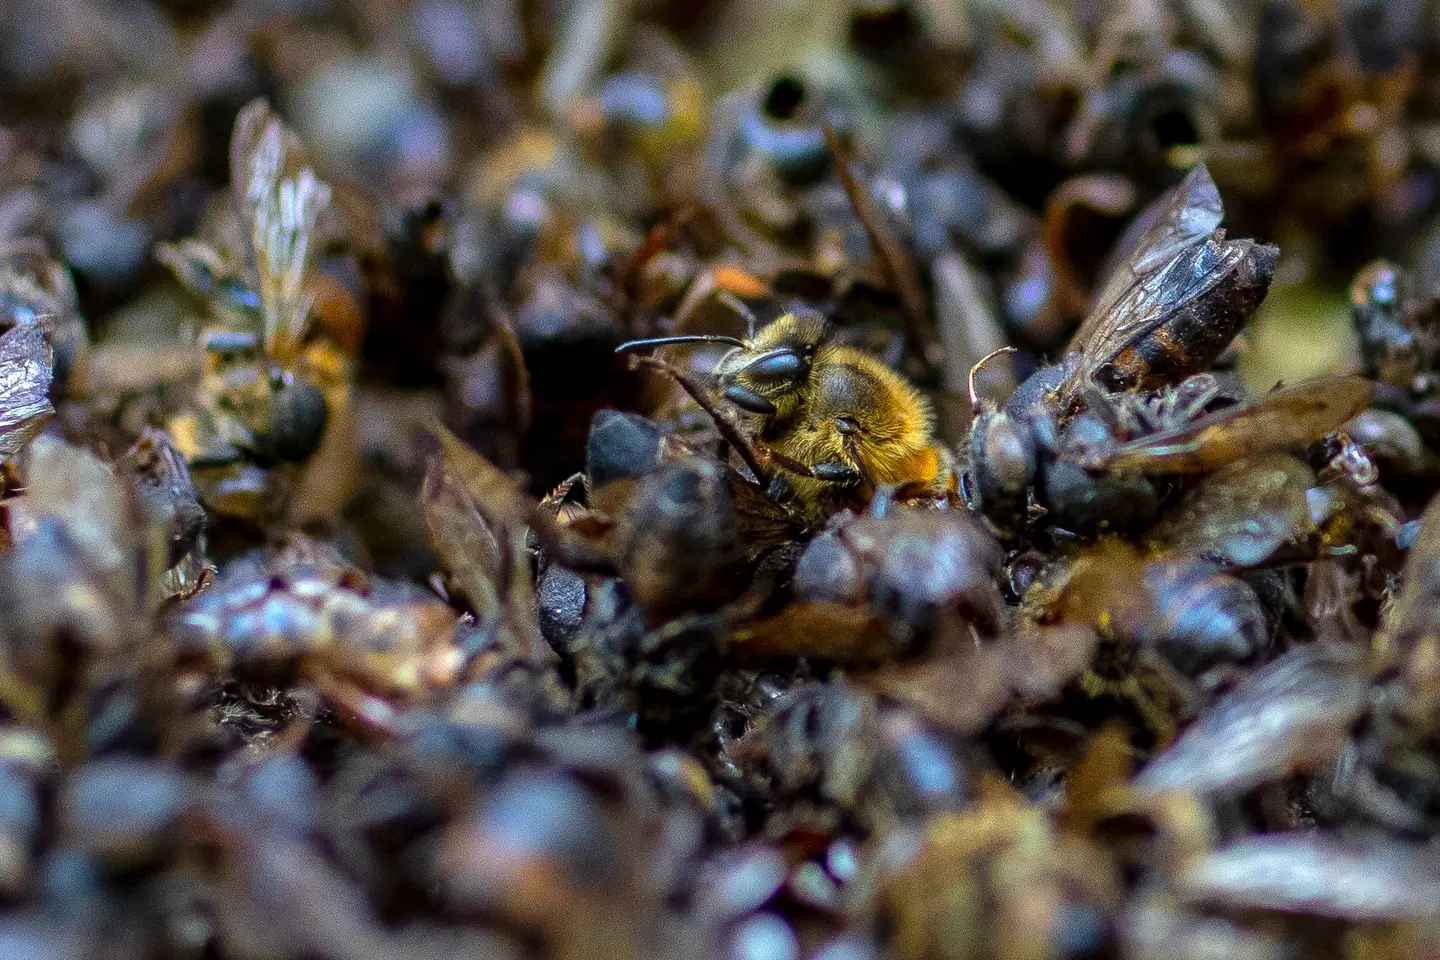 Fipronil has killed millions of bees across the globe.